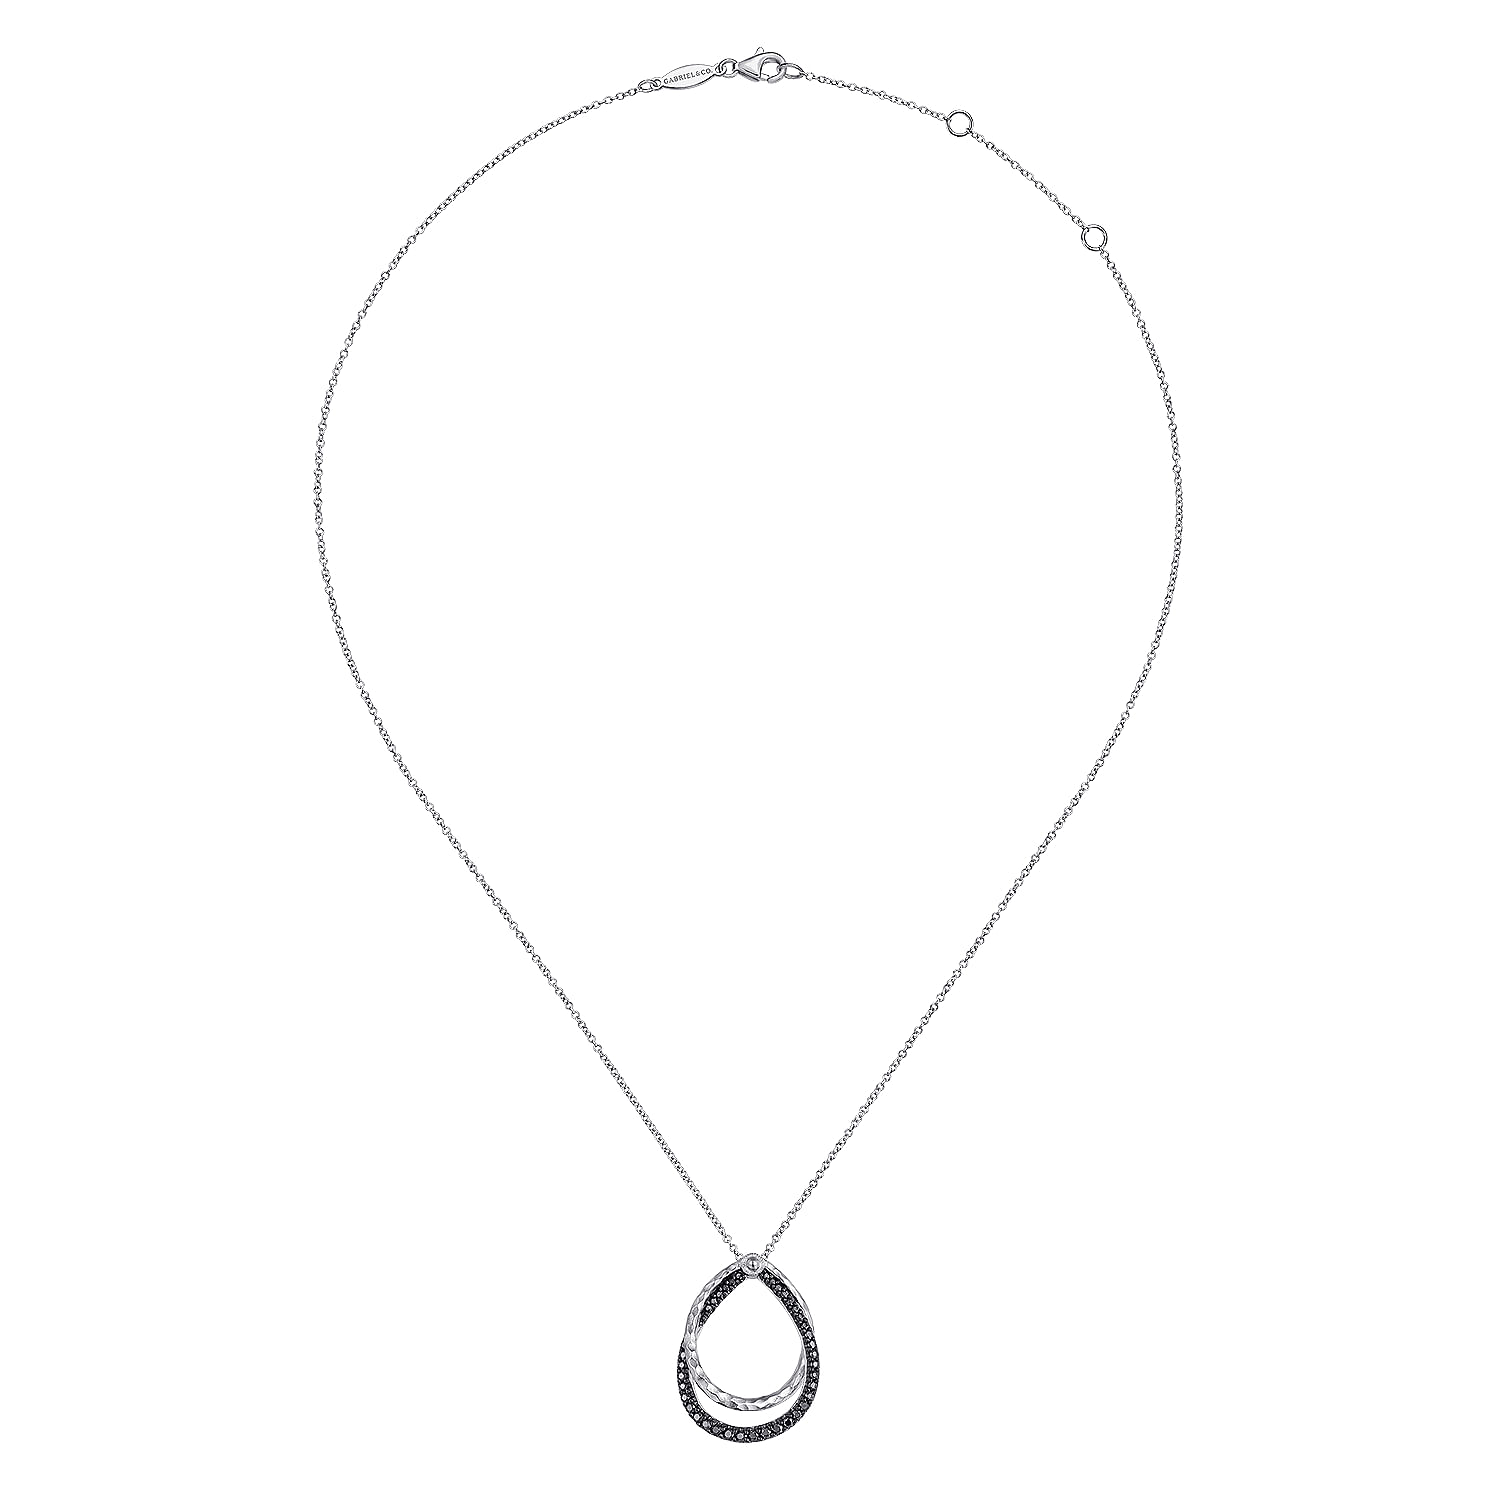 925 Sterling Silver Double Teardrop Black Spinel Pendant Necklace